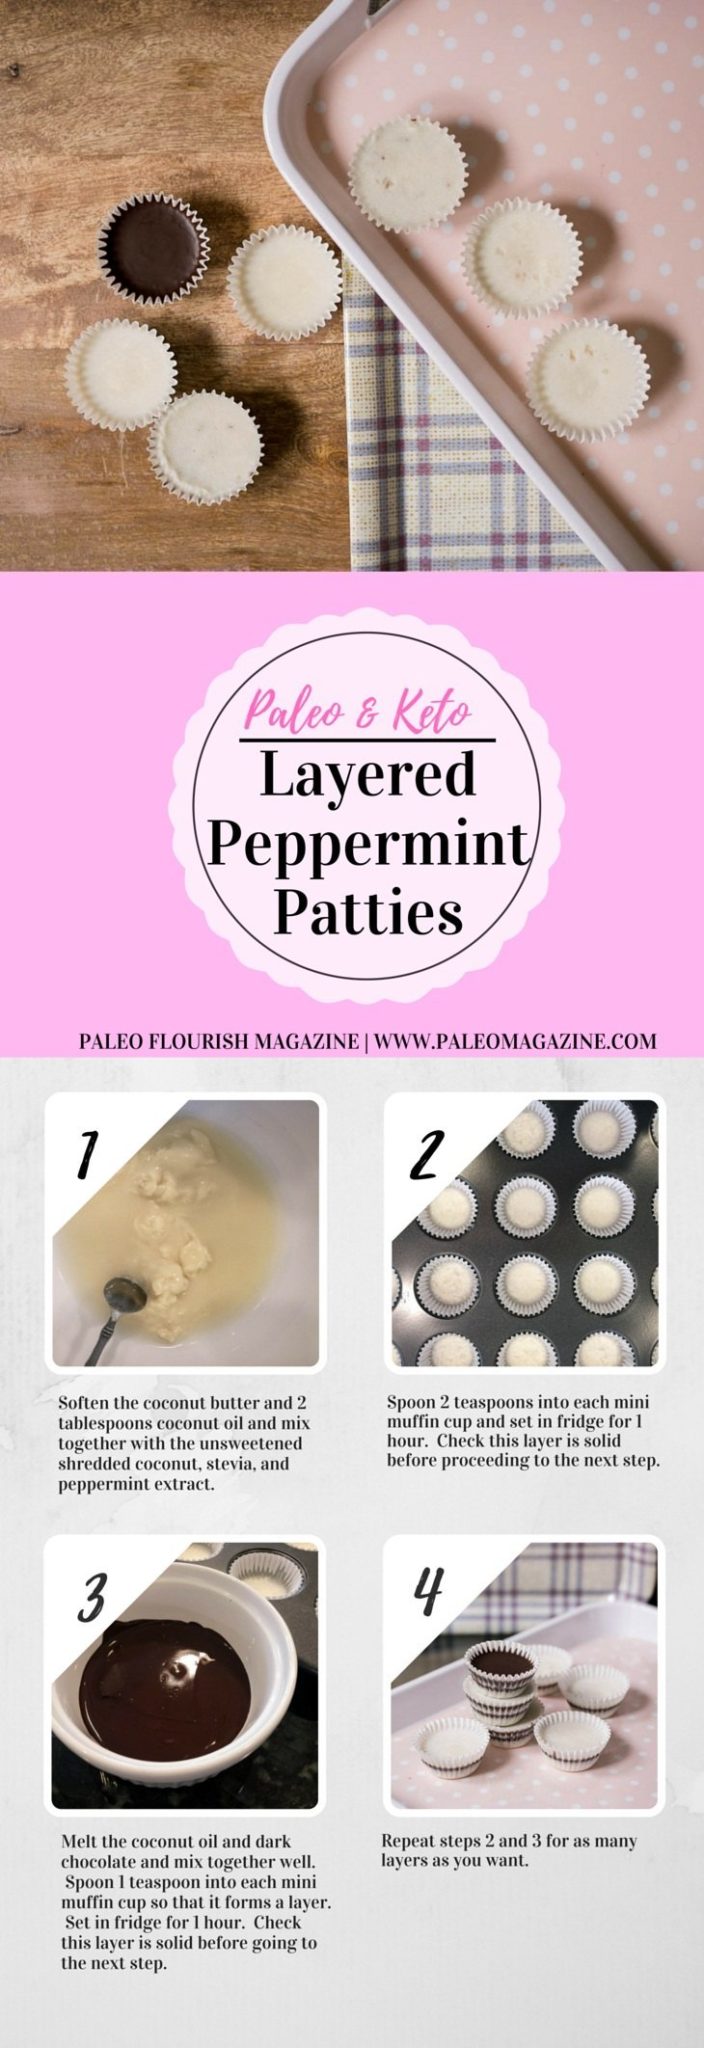 Keto Layered Peppermint Patties Recipe [Paleo, Low Carb, Dairy-Free] #paleo #recipes #glutenfree https://ketosummit.com/paleo-peppermint-patties-recipe